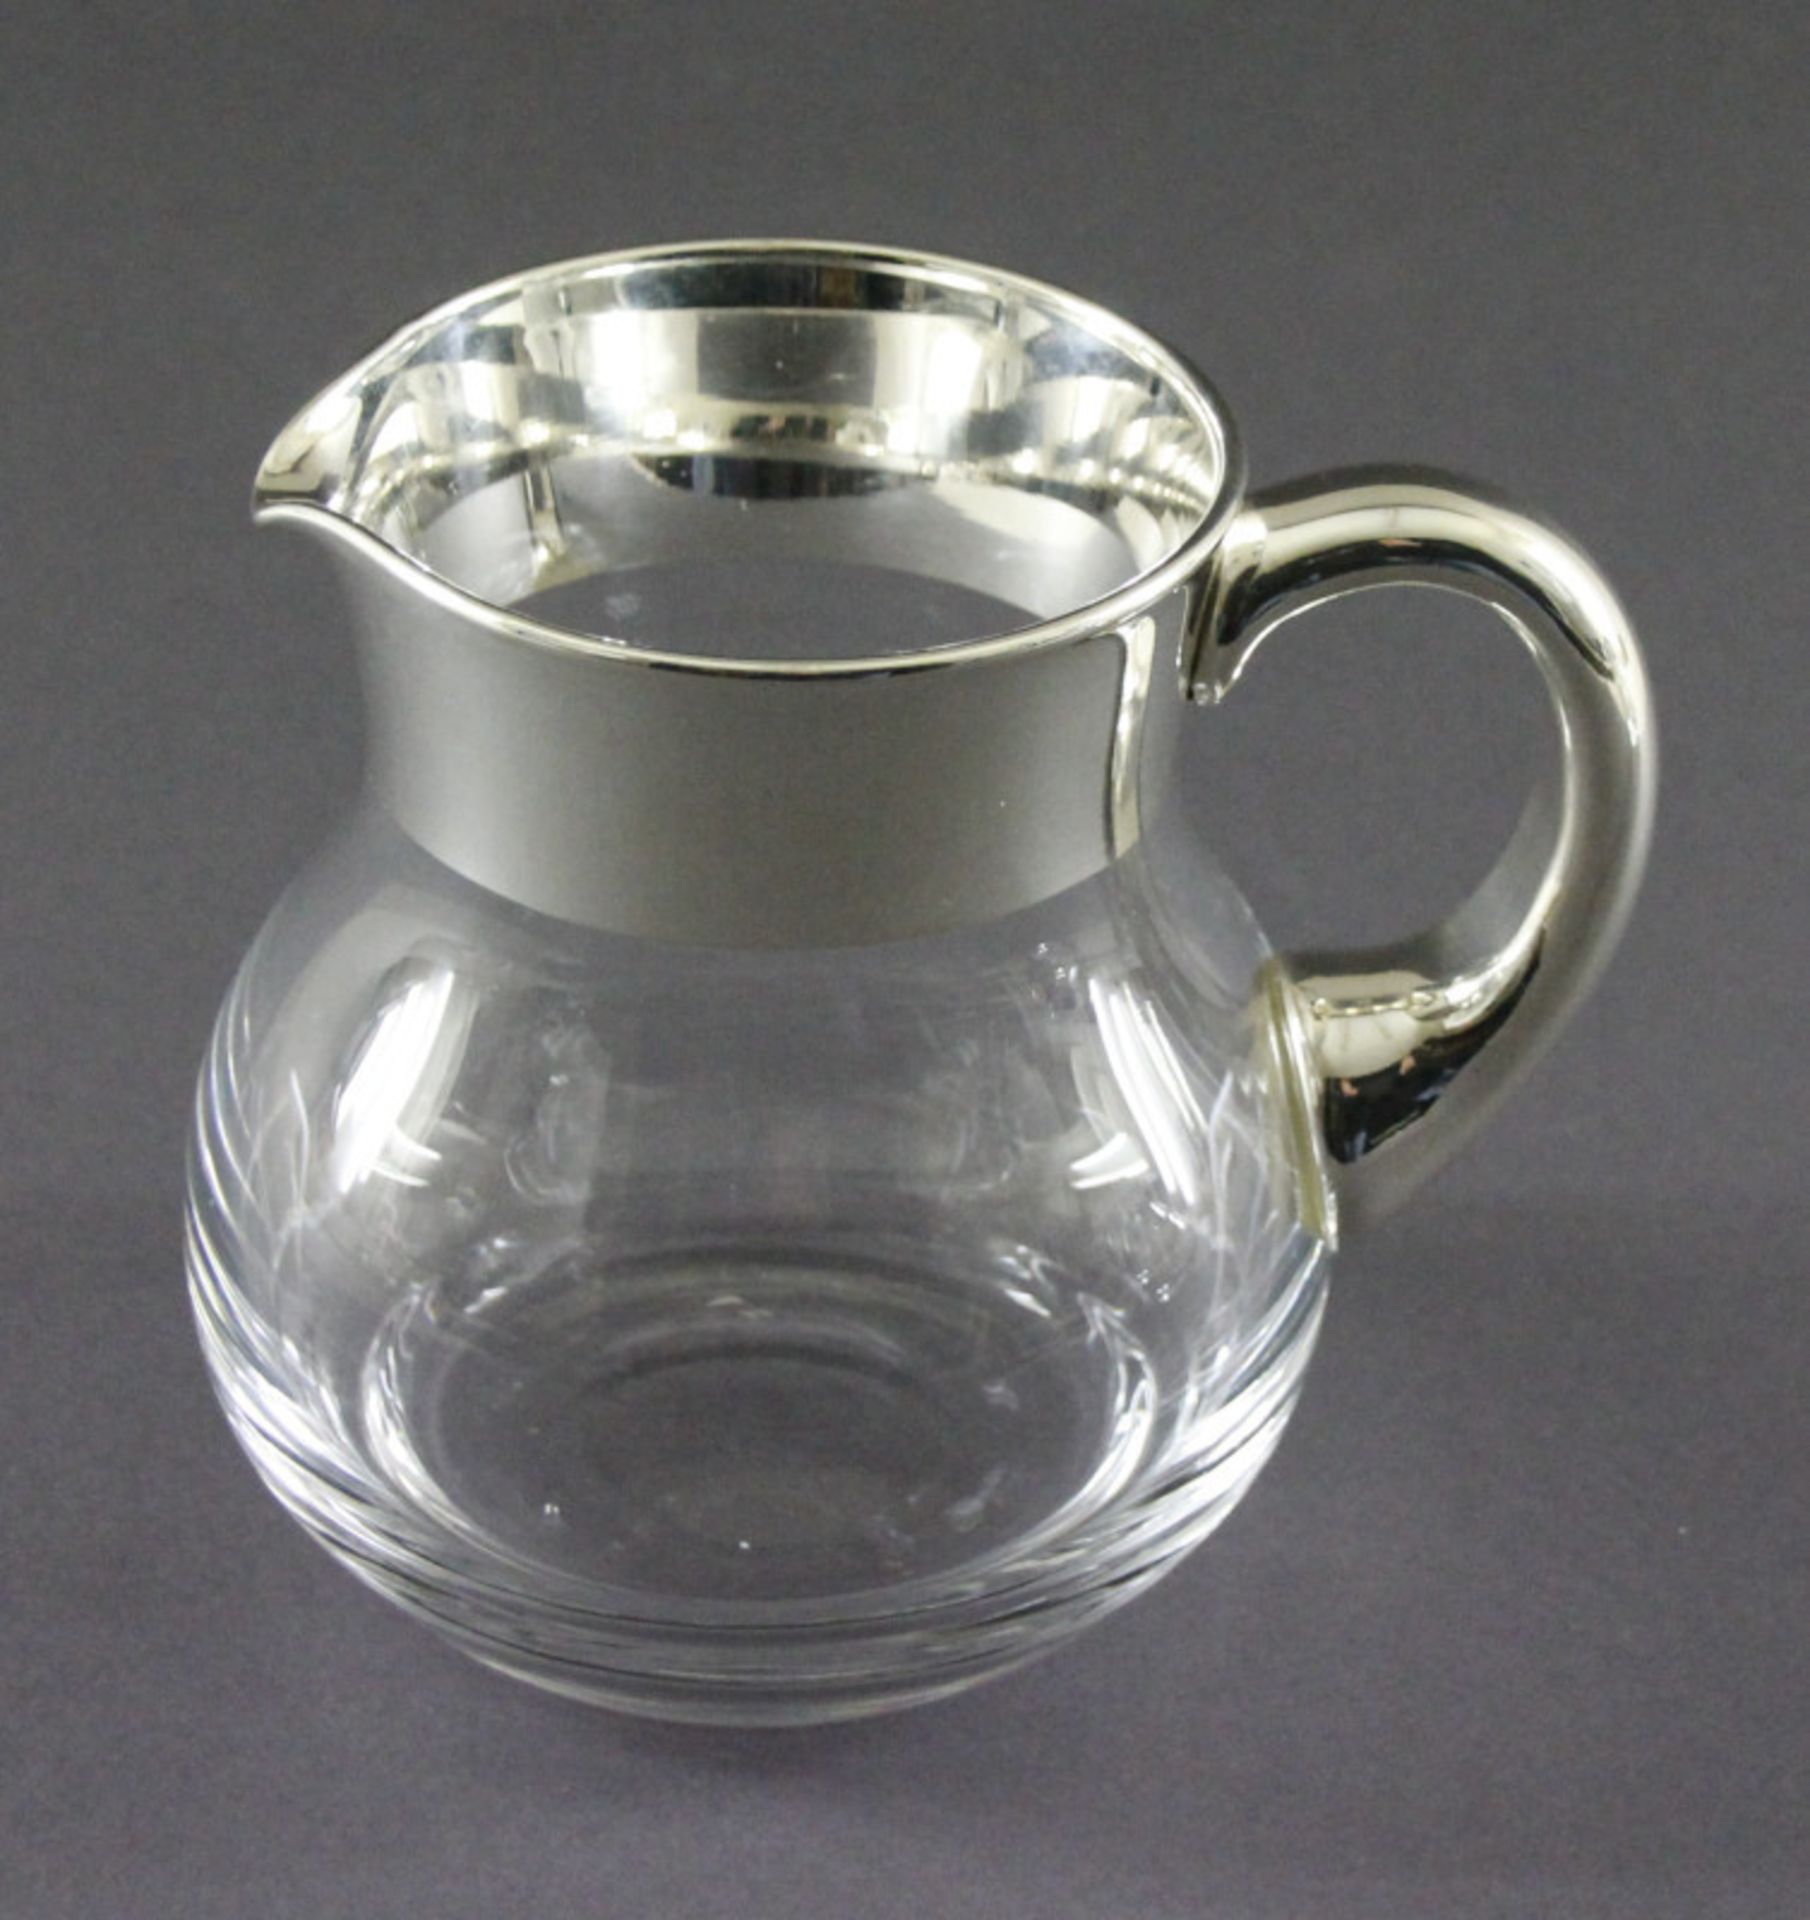 Glaskrug mit Feinsilberrand, 20. Jahrhundert1/2 Liter, guter Zustand, Höhe: 12cm